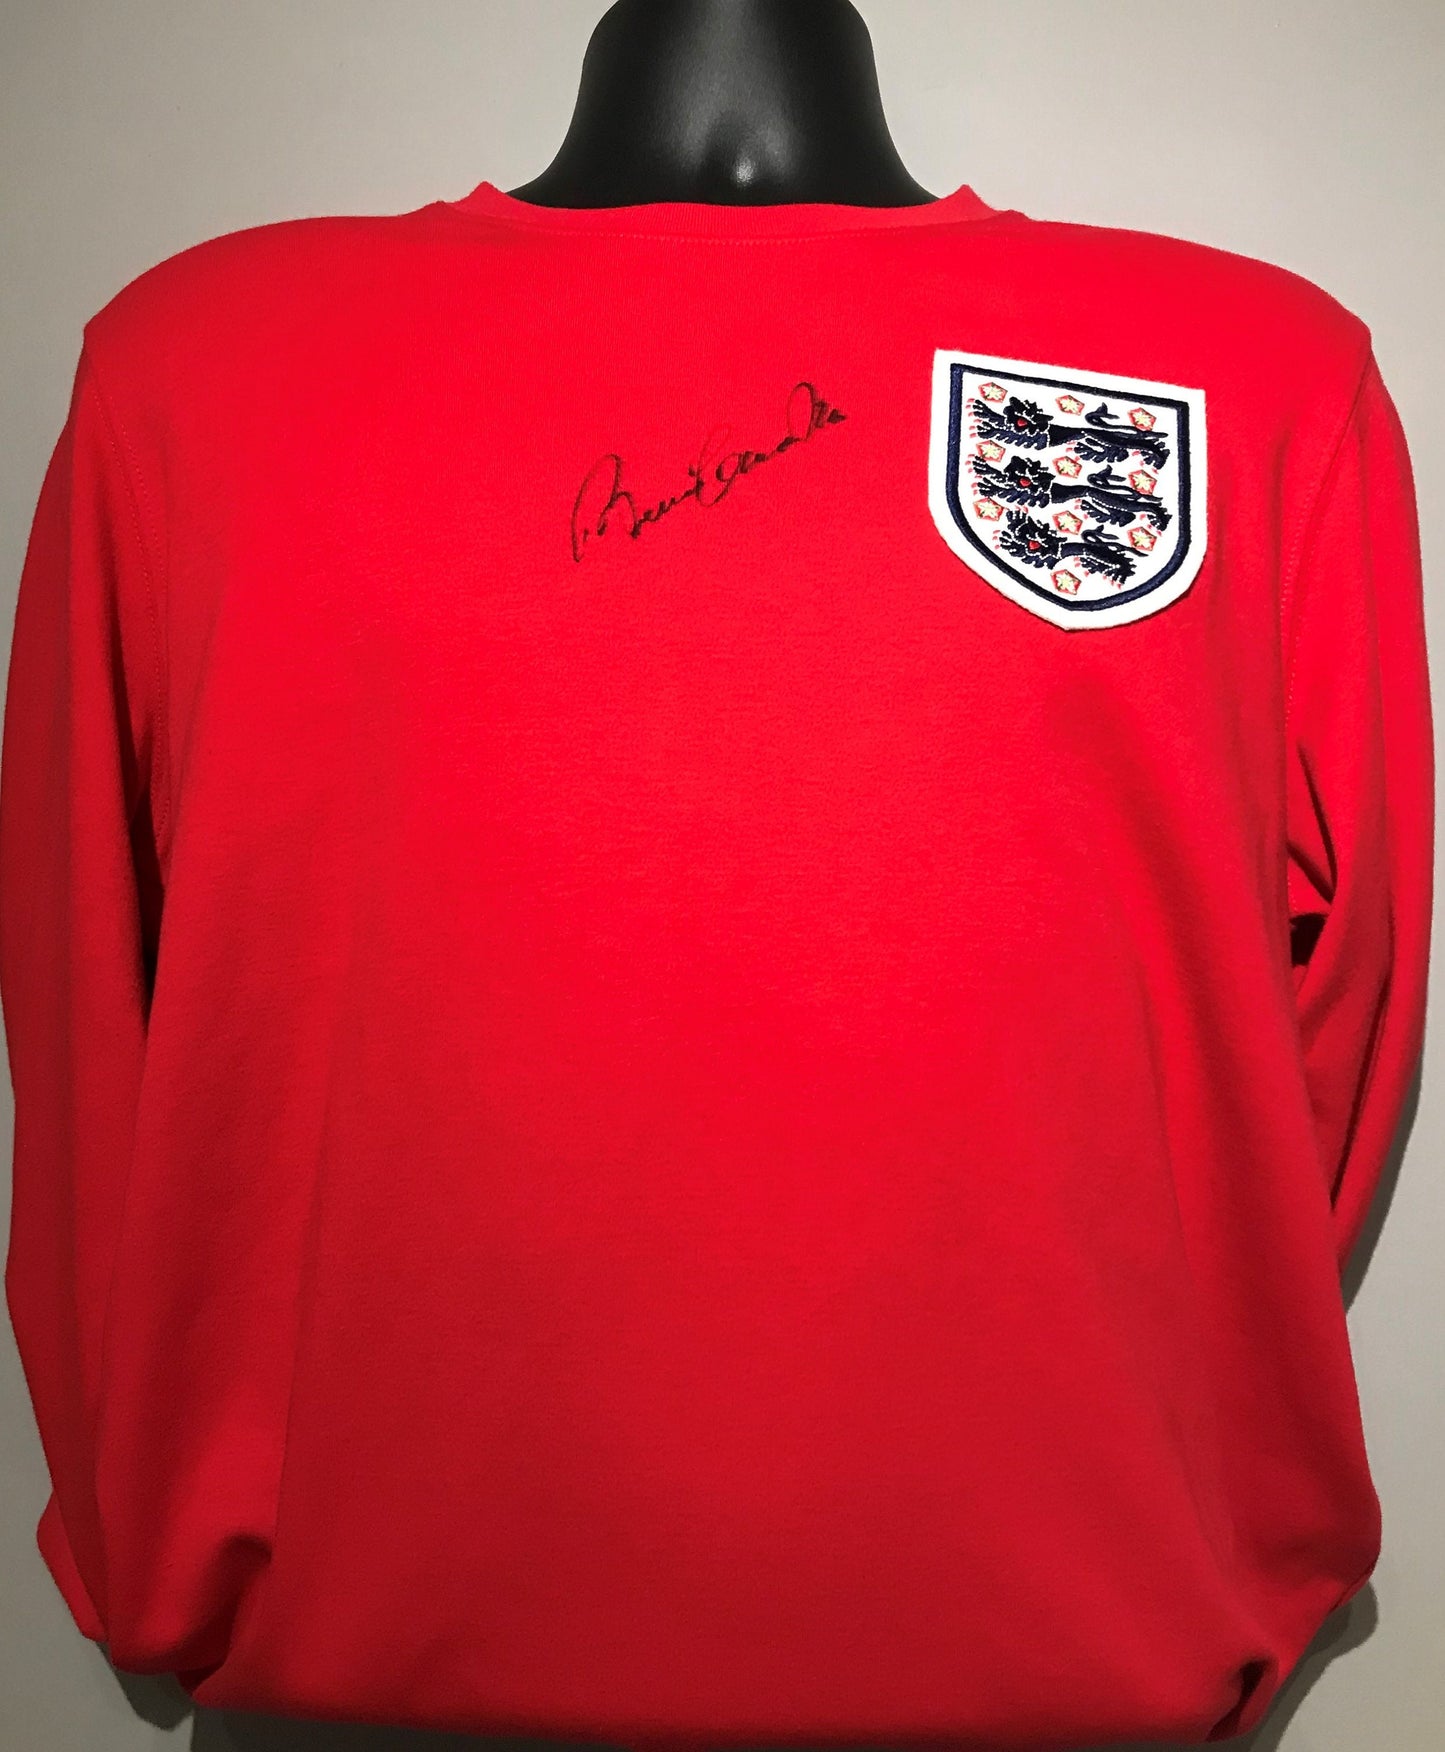 Bobby Charlton - England - hand-signed replica shirt - England memorabilia, 1966 world cup football shirt (UNFRAMED)